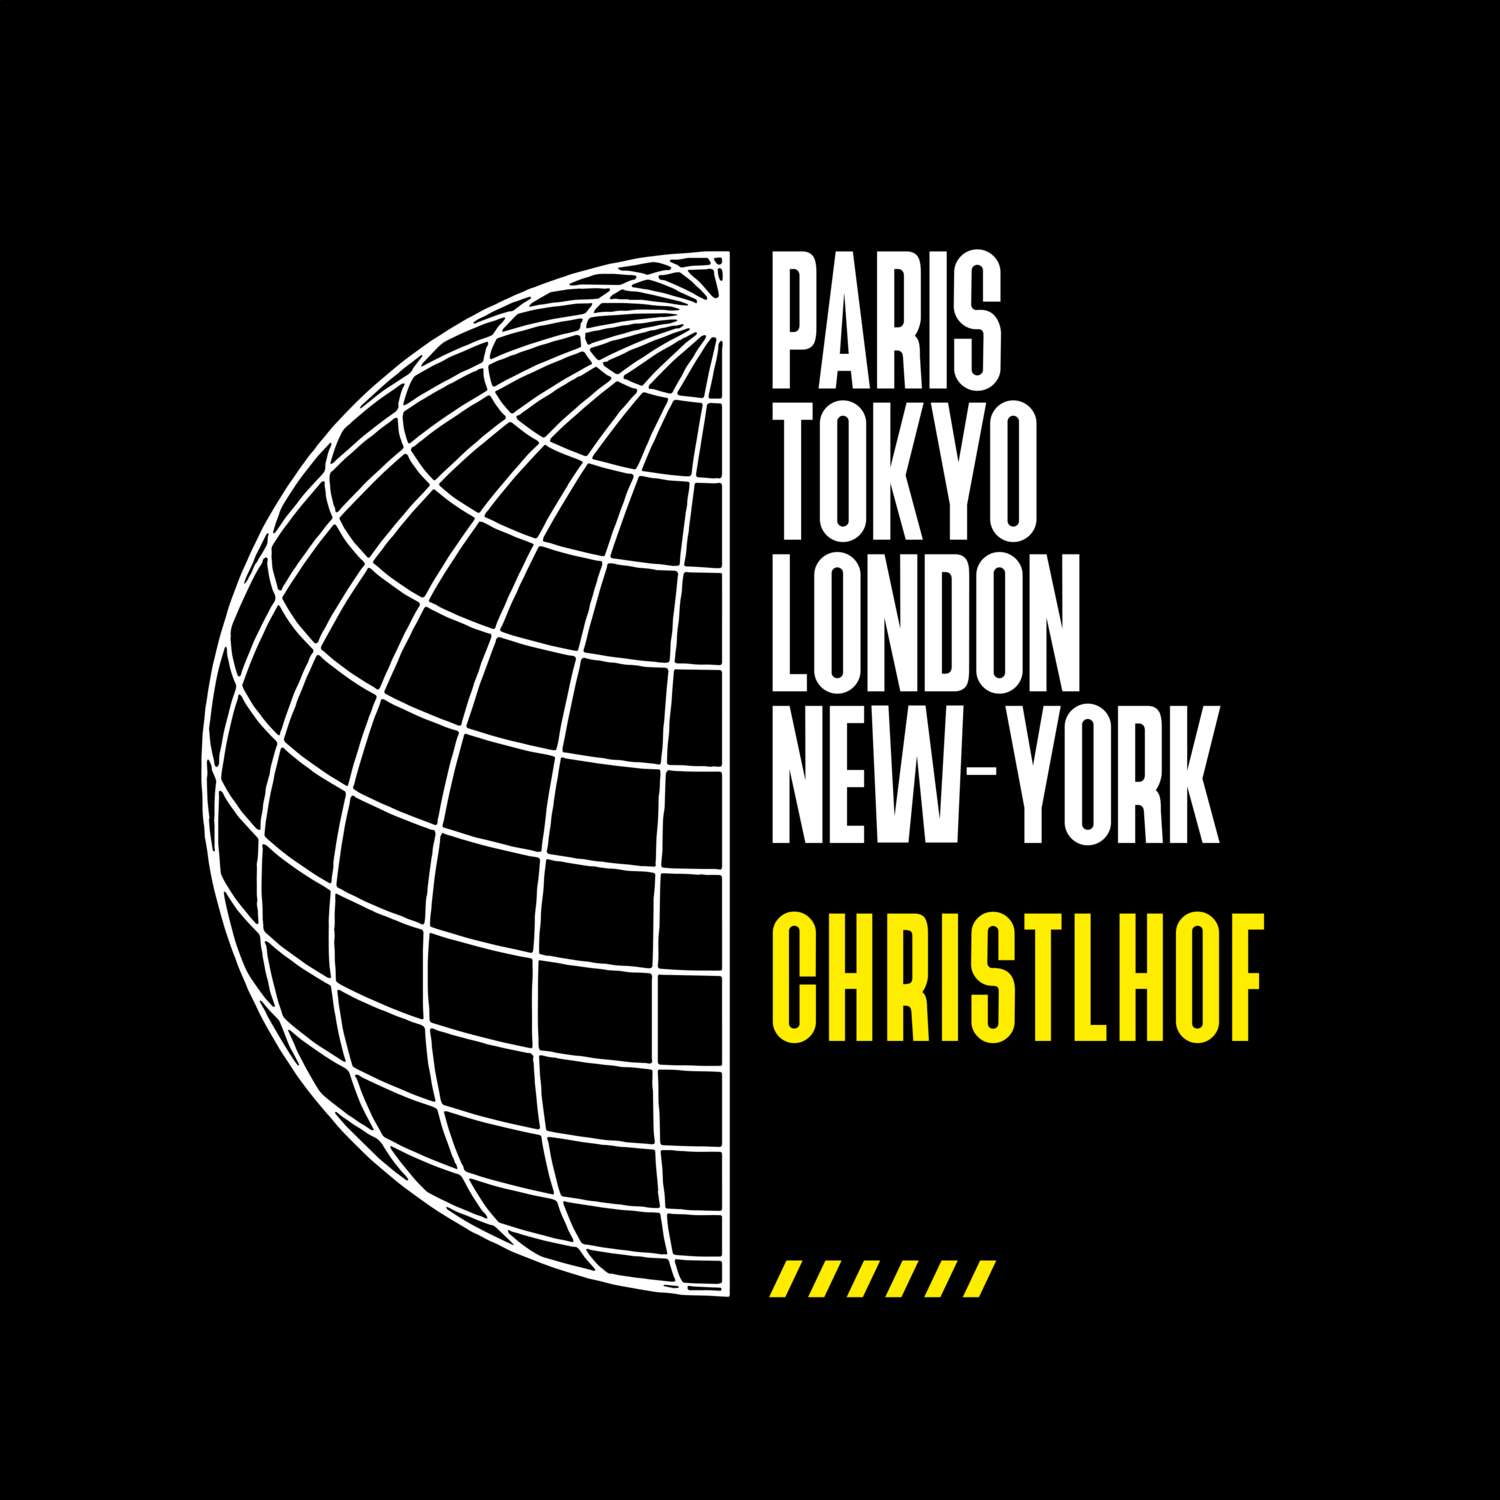 Christlhof T-Shirt »Paris Tokyo London«